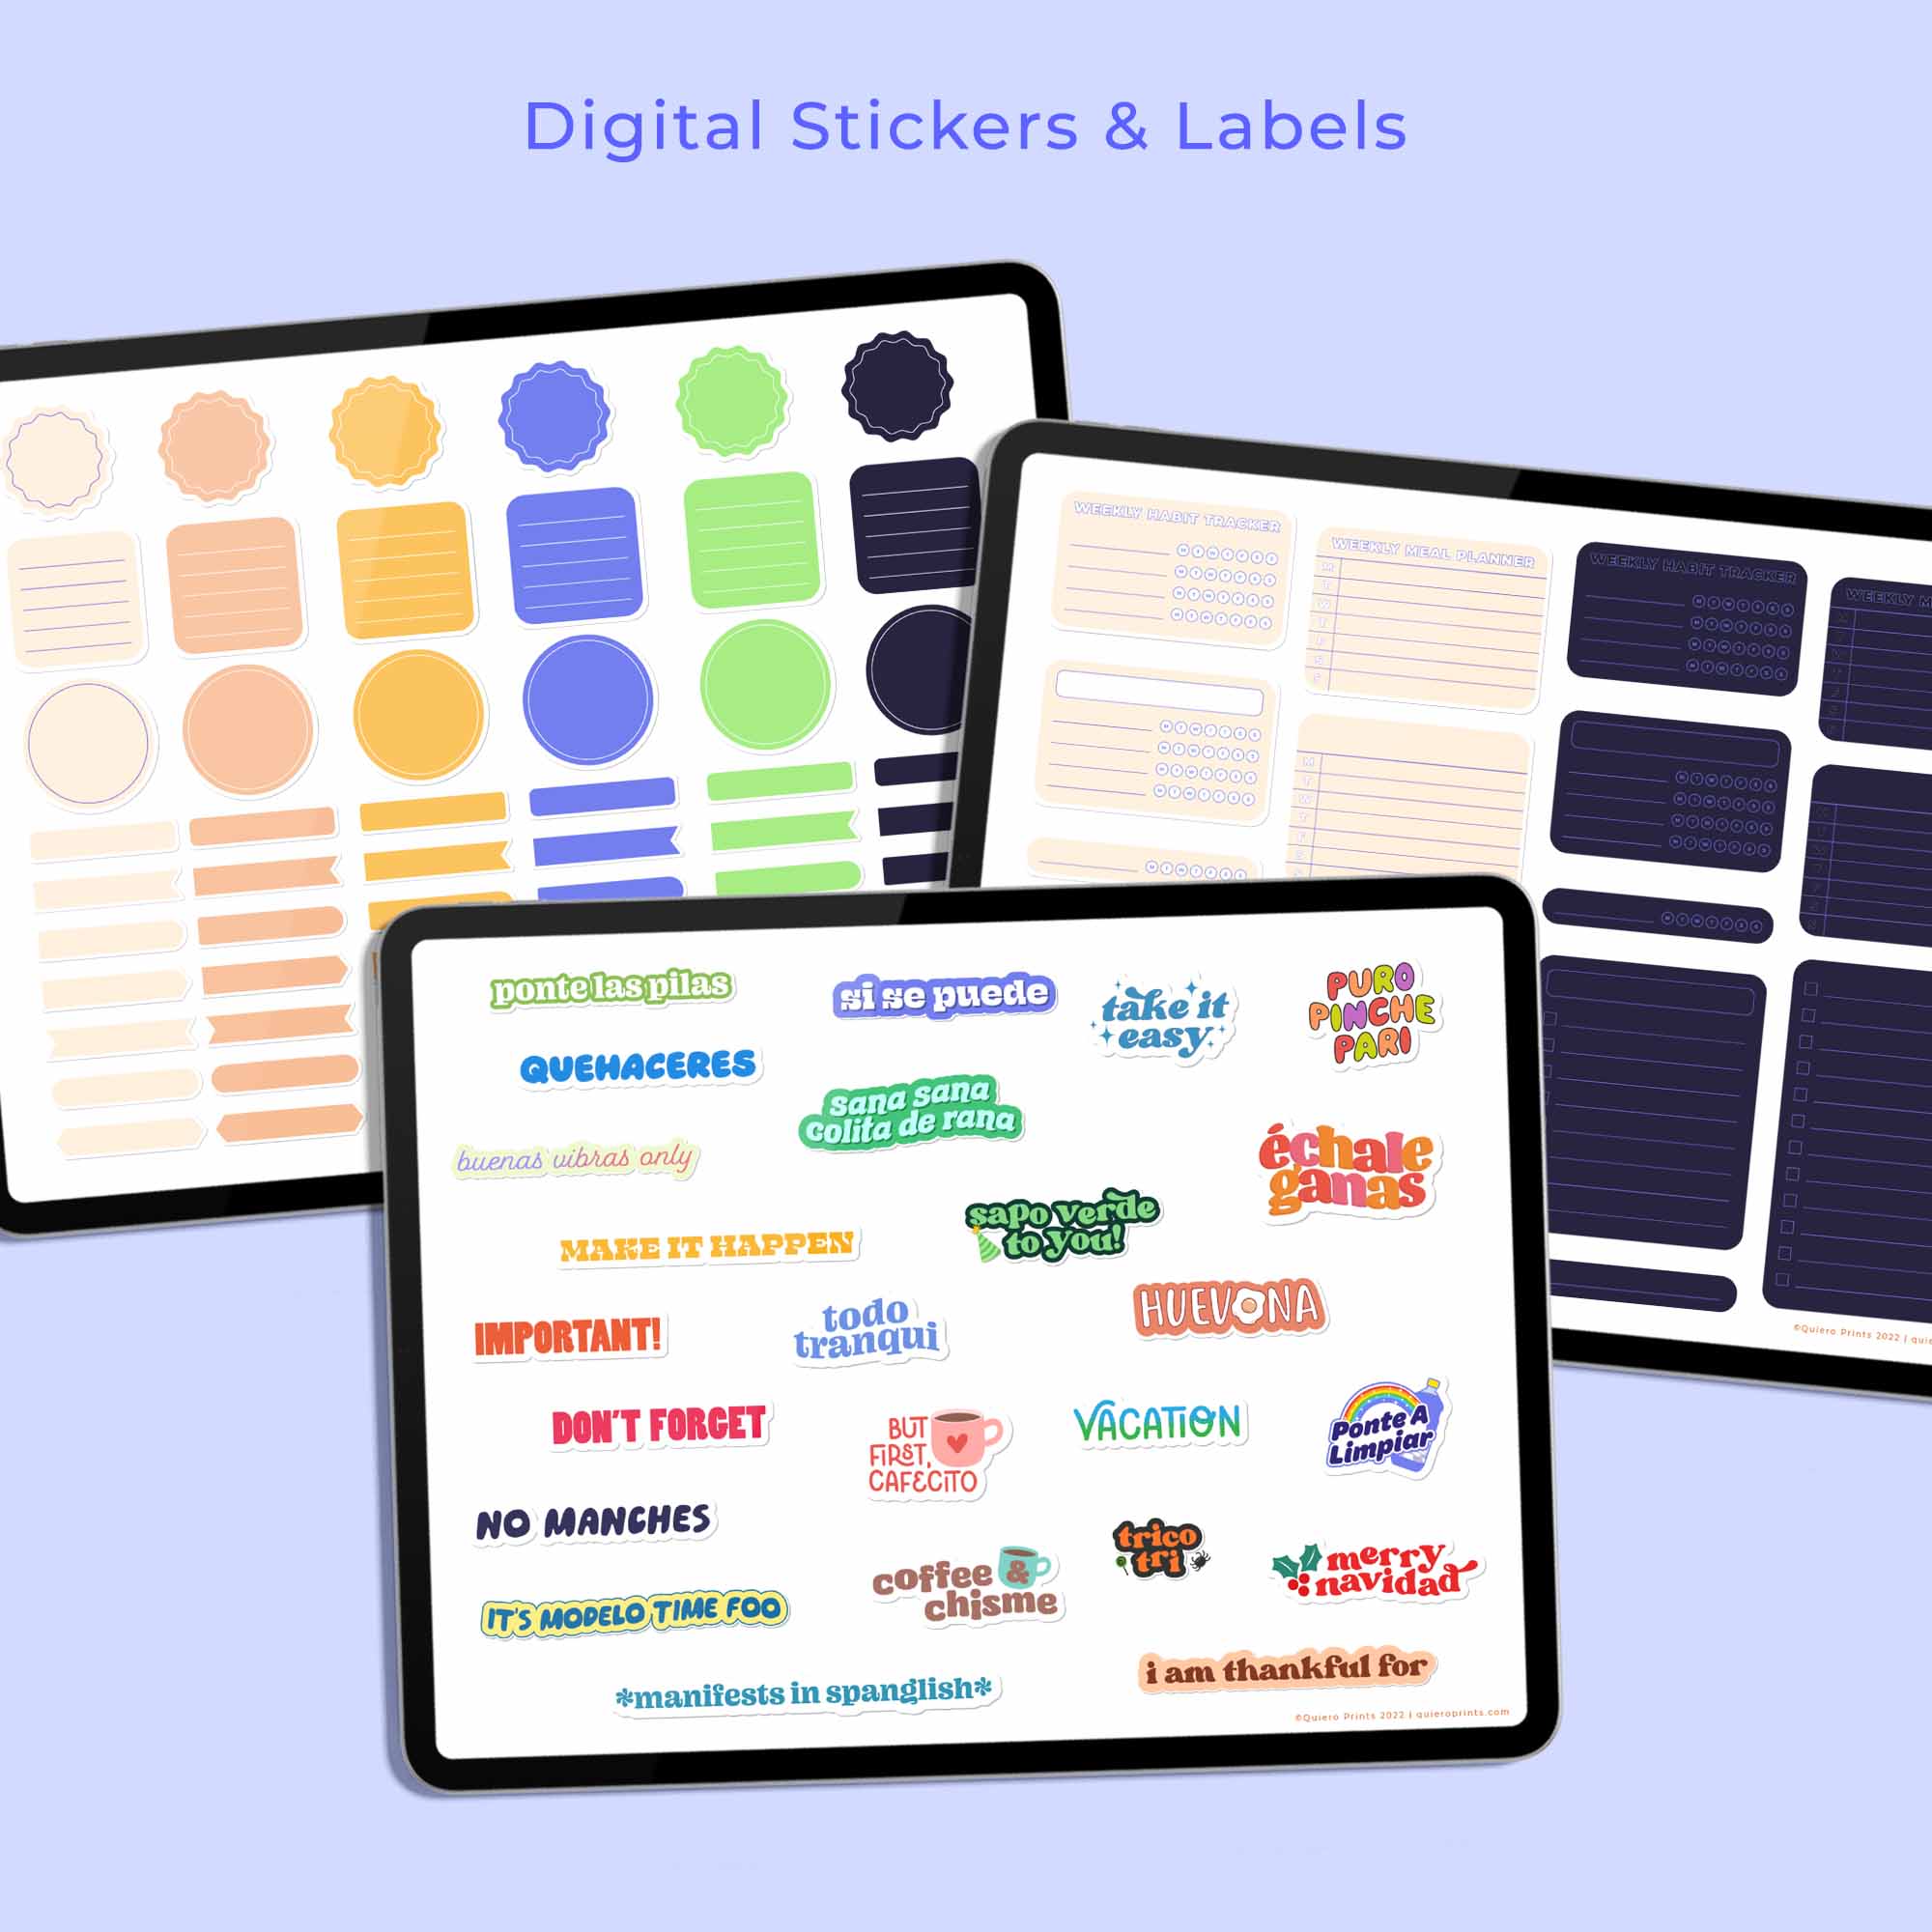 Colorful Digital Planner Sticker Graphic by idelotama · Creative Fabrica